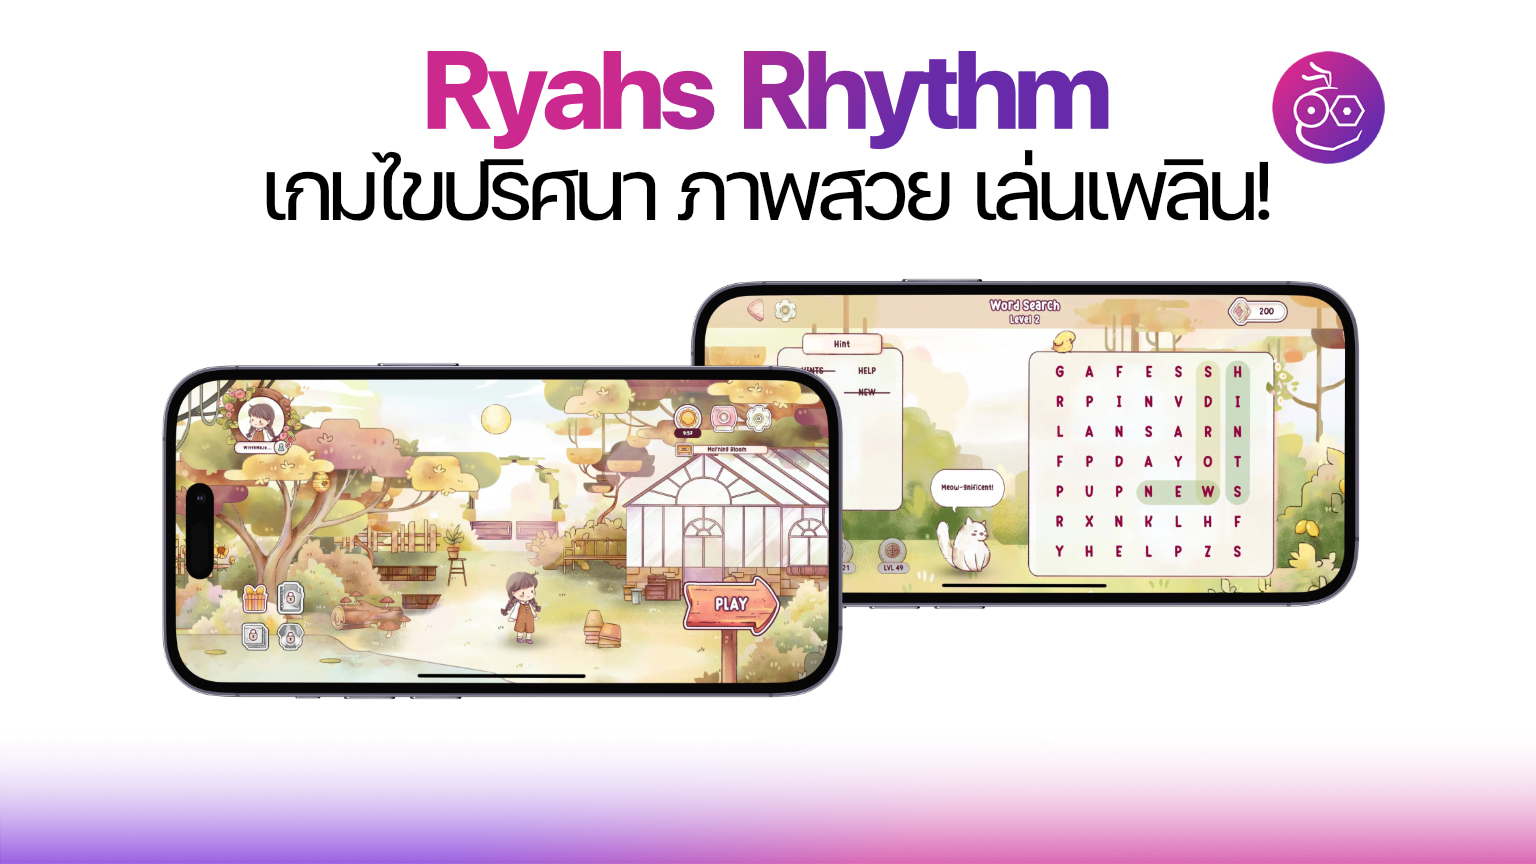 Ryahs Rhythm，一款画面精美的益智游戏，玩起来很有趣！